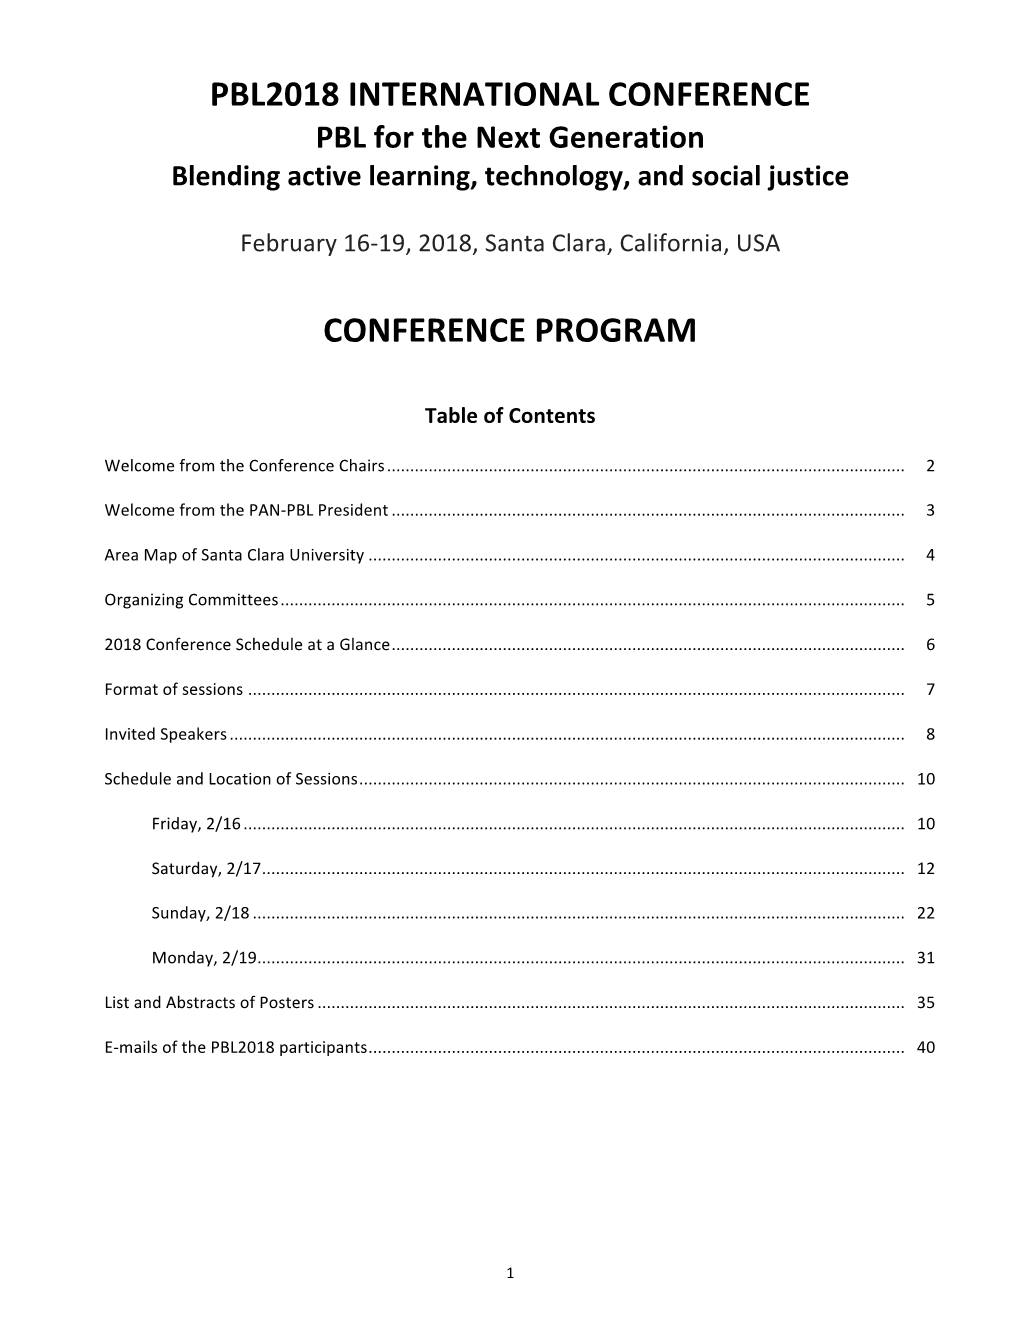 PBL2018 — International Conference on Problem Based Learning